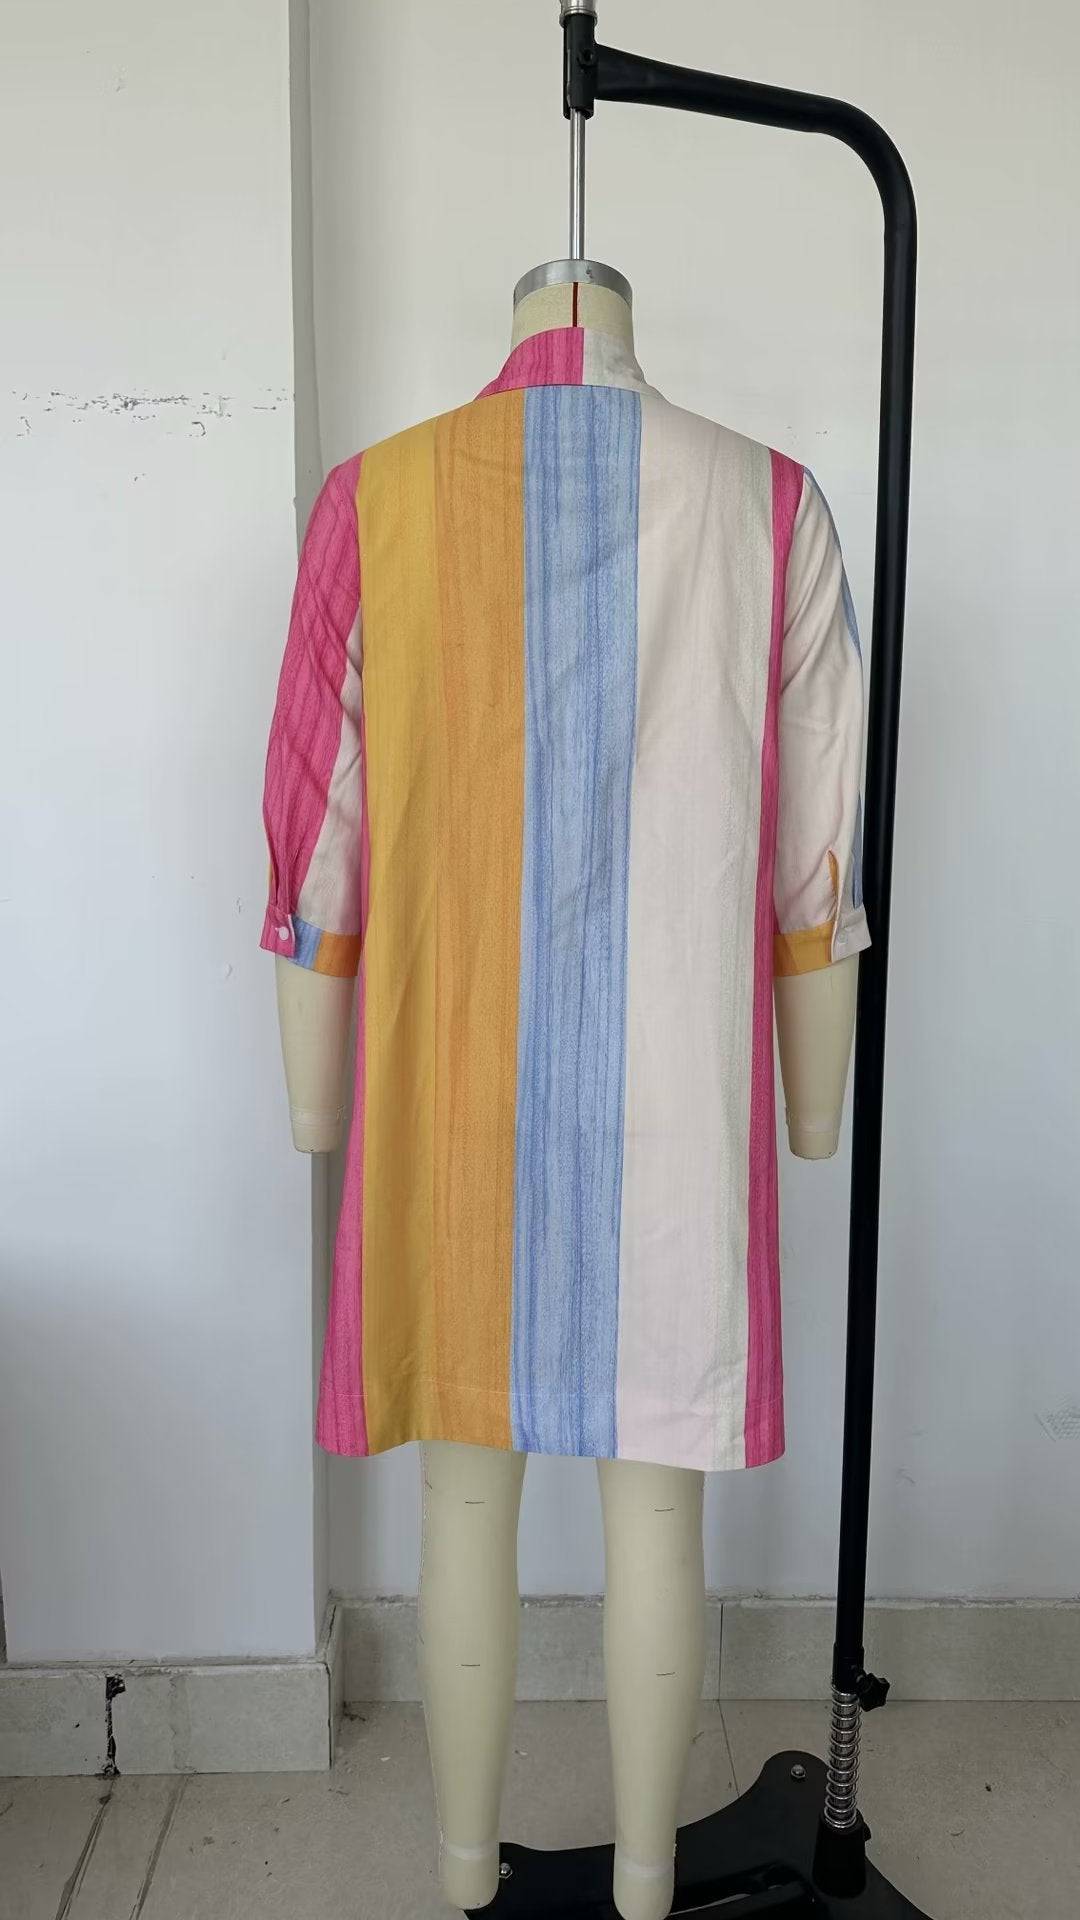 Retro Elegant Colorful Ptripe Shirt Cotton Stand Collar Loose Idle Women